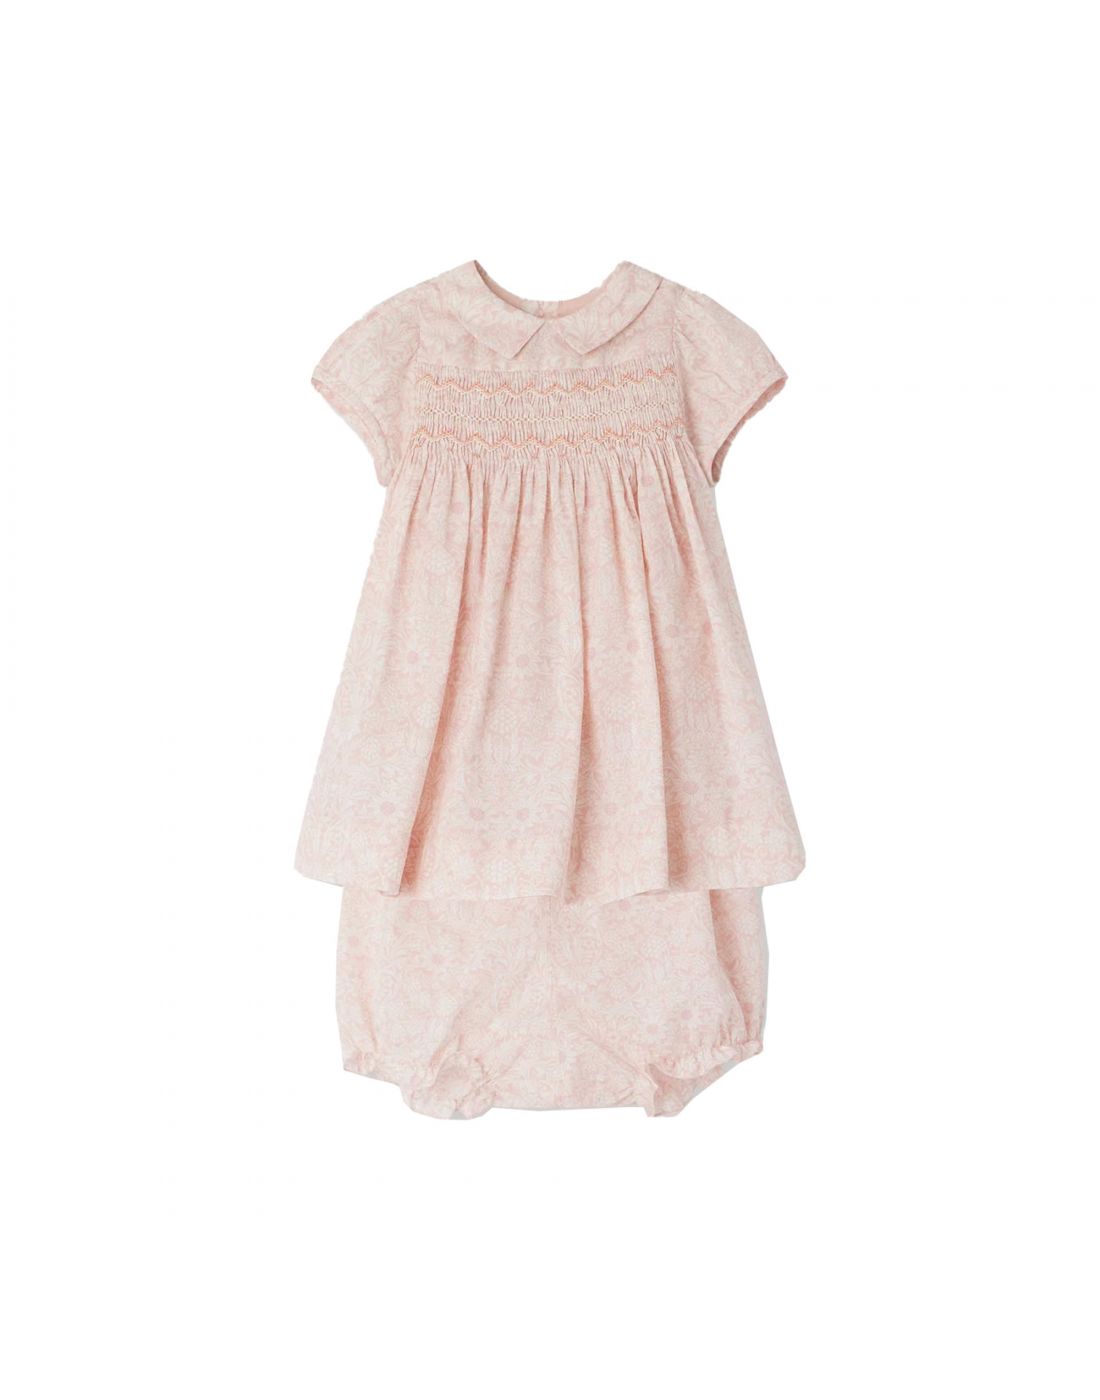 Bon Point Smocked Joyeuse Babys Dress